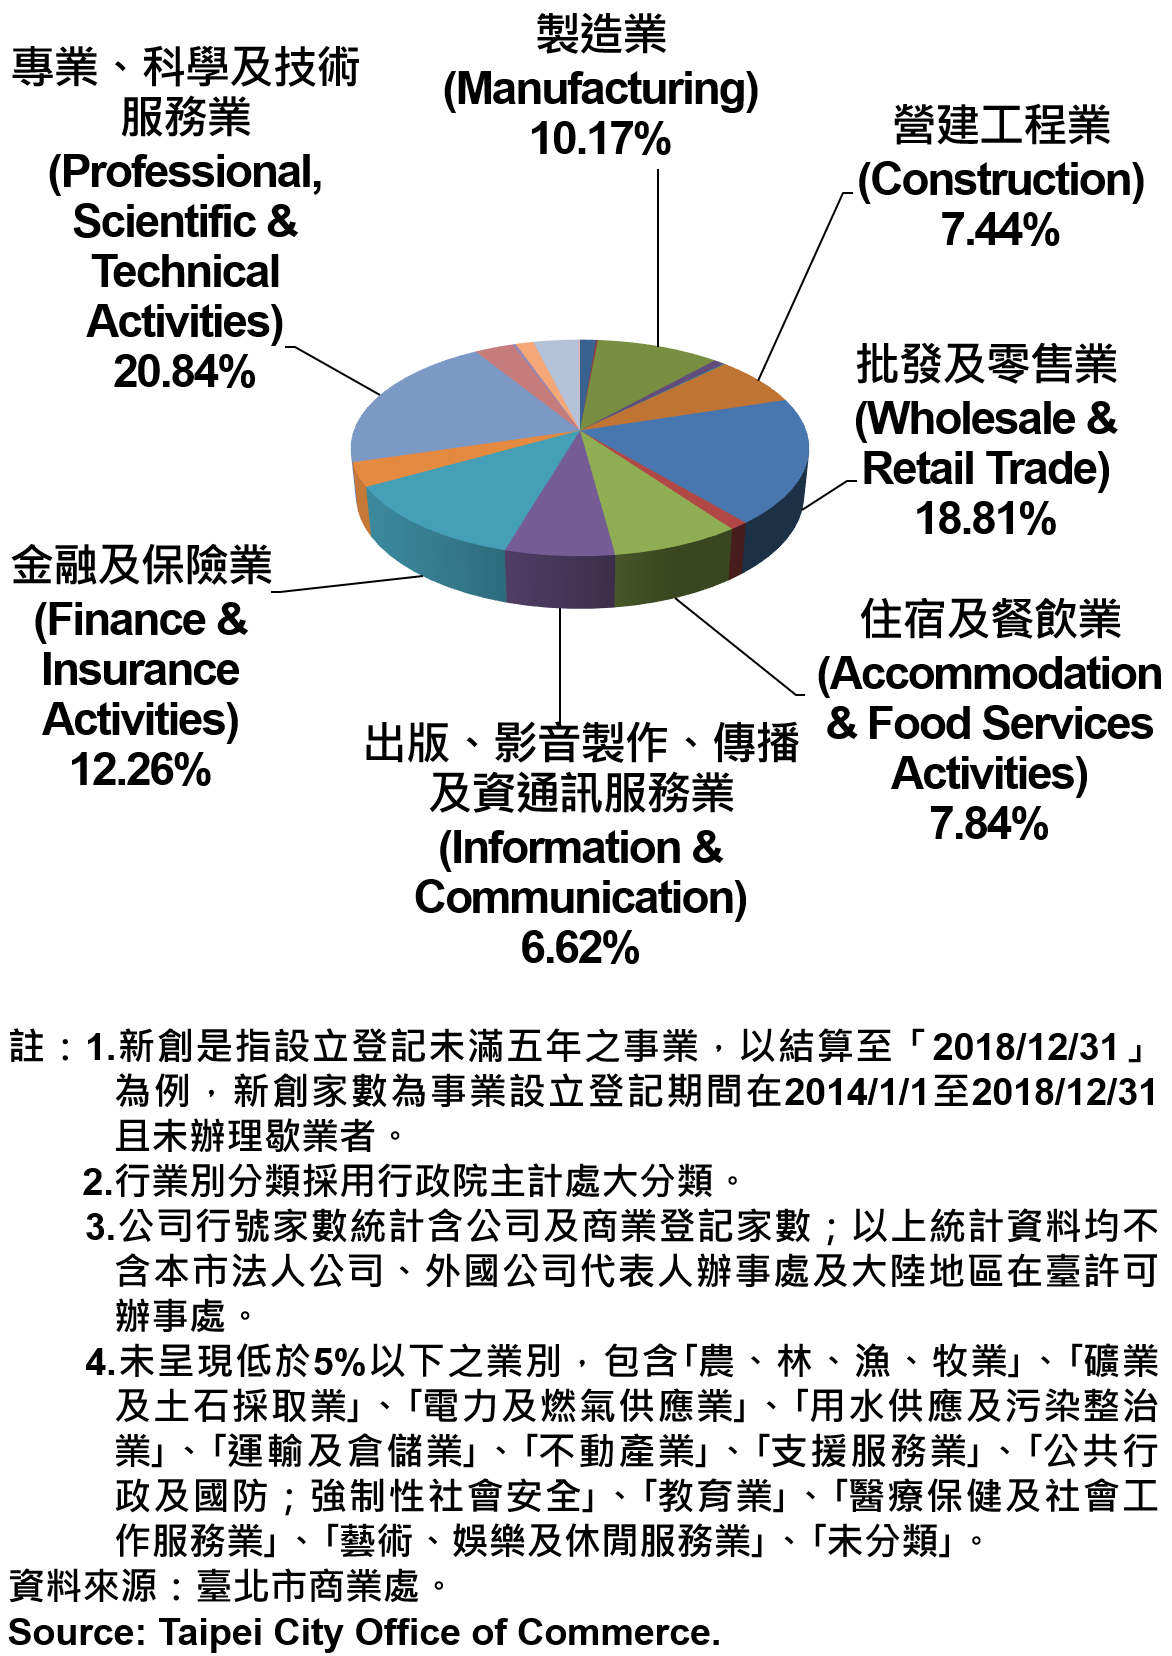 臺北市新創公司行號業別分布情形—現存家數2021Q1 Newly Registered Companies in Taipei City by Industry - Number of Current – 2021Q1